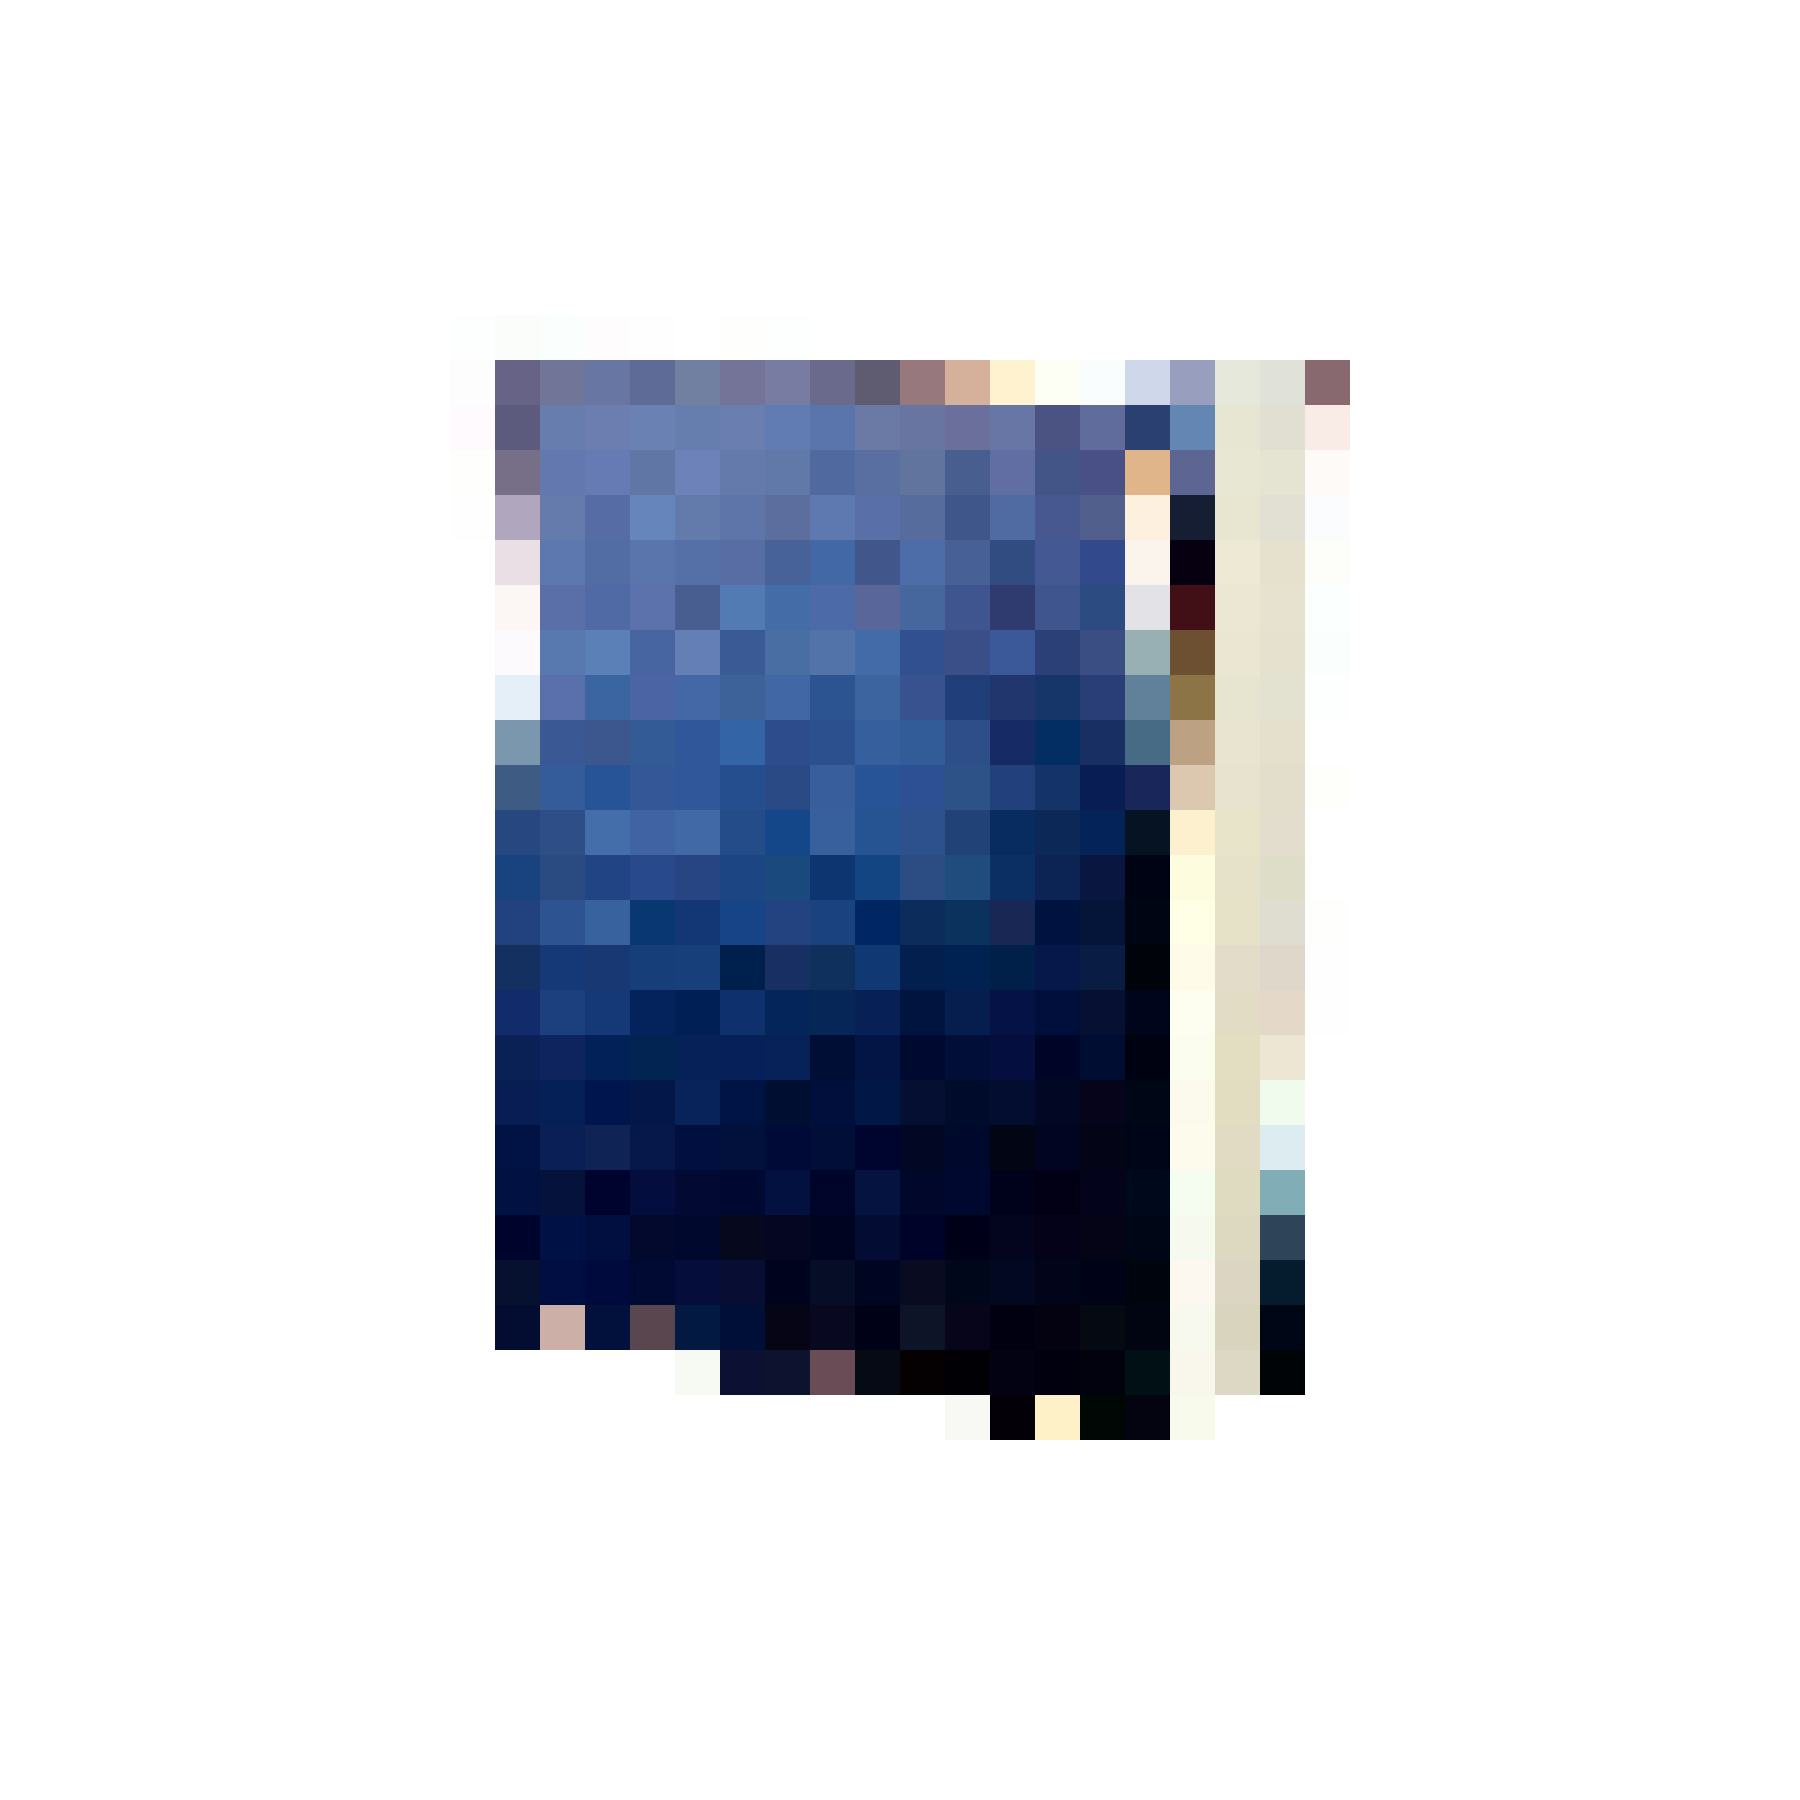 Oldschool: Album di fotografie blu, 25×30 cm, fr. 19.95, da Coop.